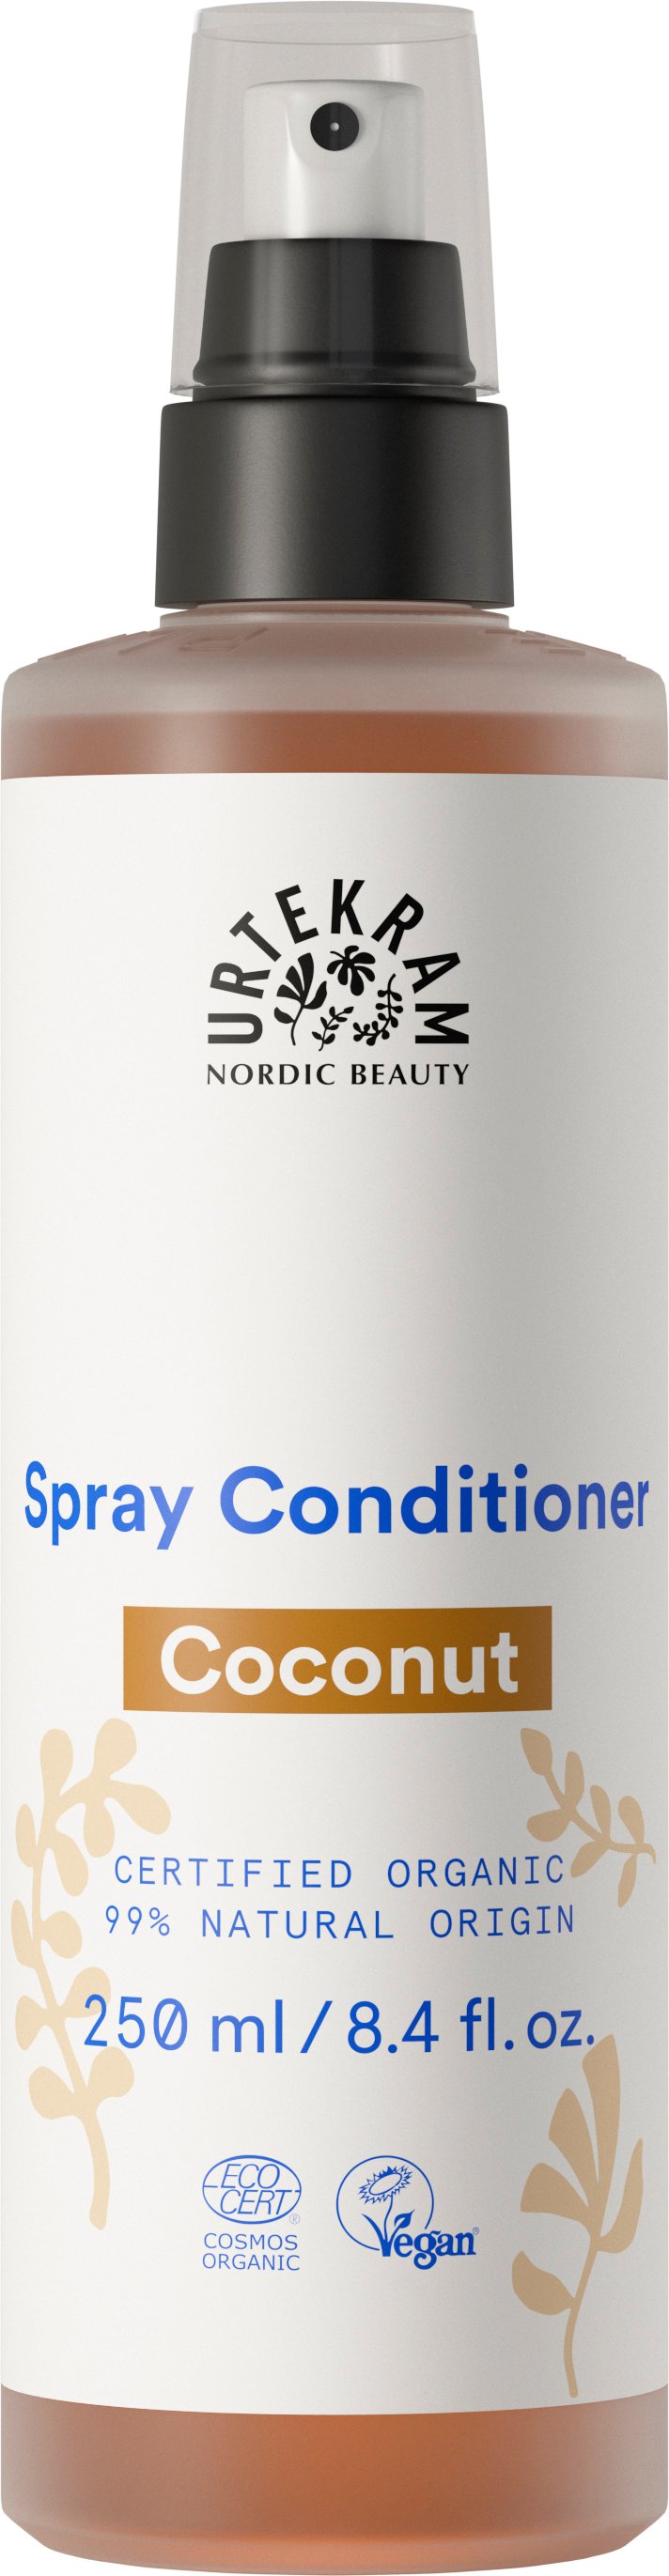 Urtekram Beauty Coconut Spray Conditioner 250 ml